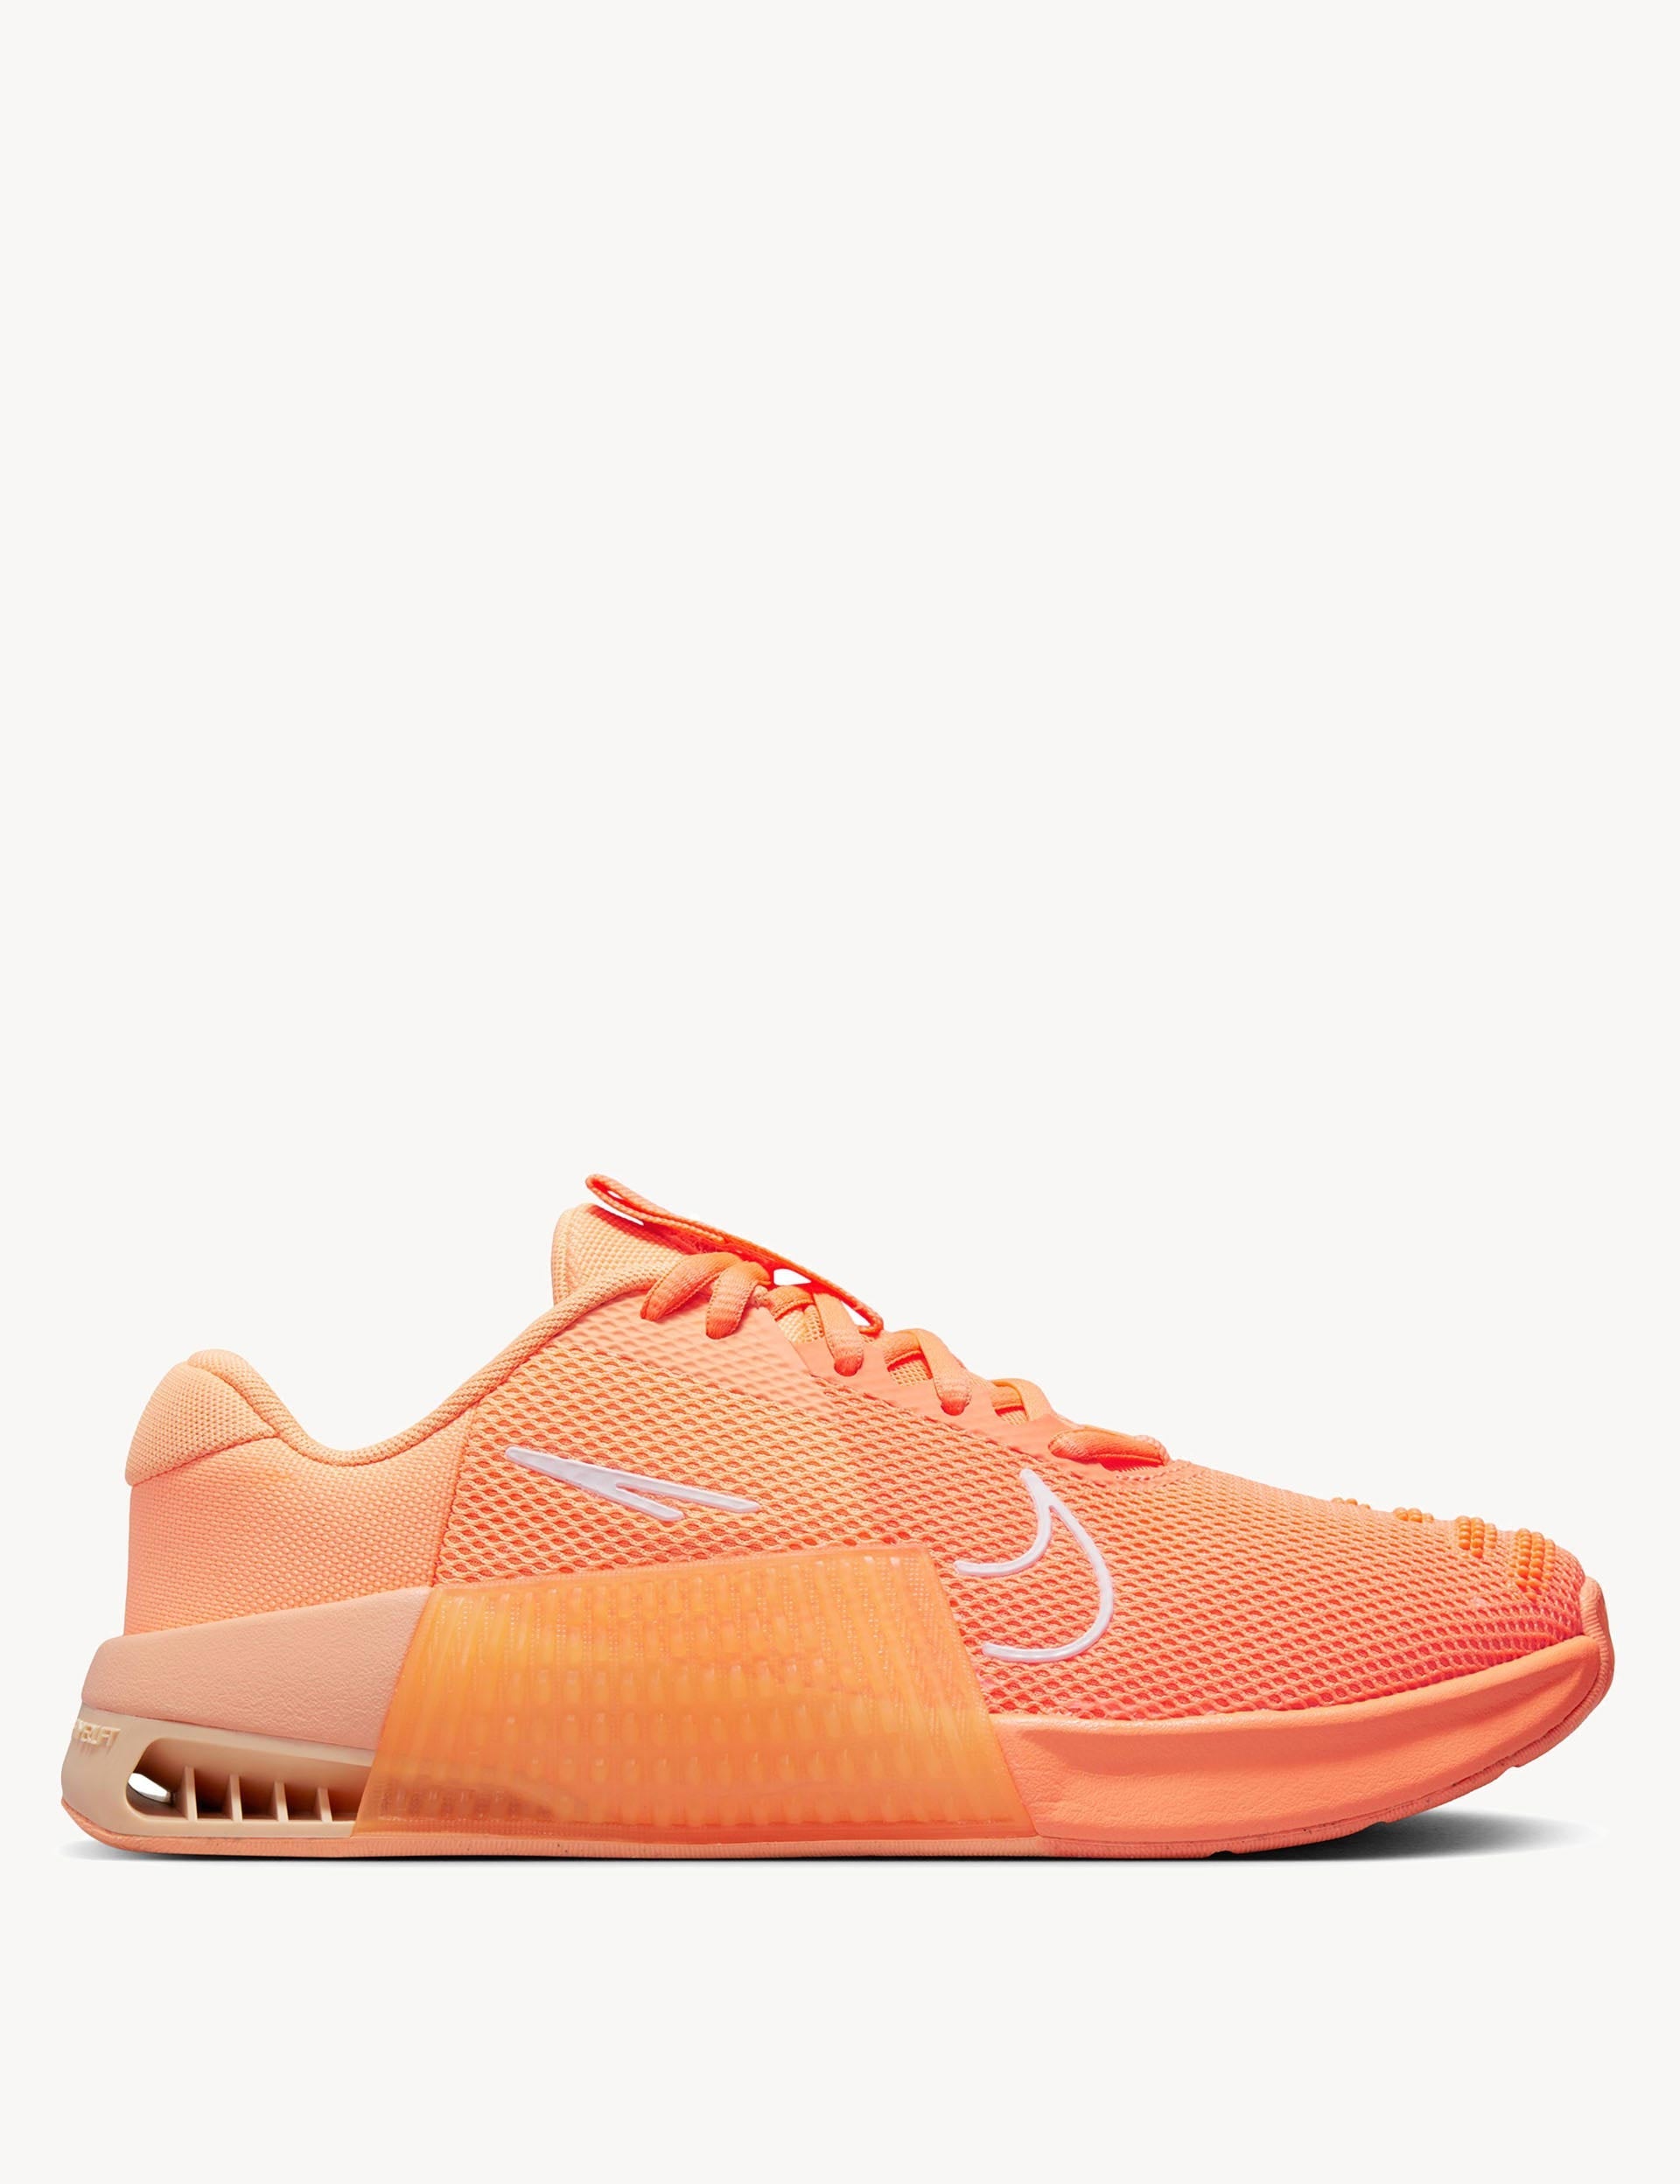 Nike | Metcon 9 AMP Shoes - Orange/White/Ice Peach | The Sports Edit